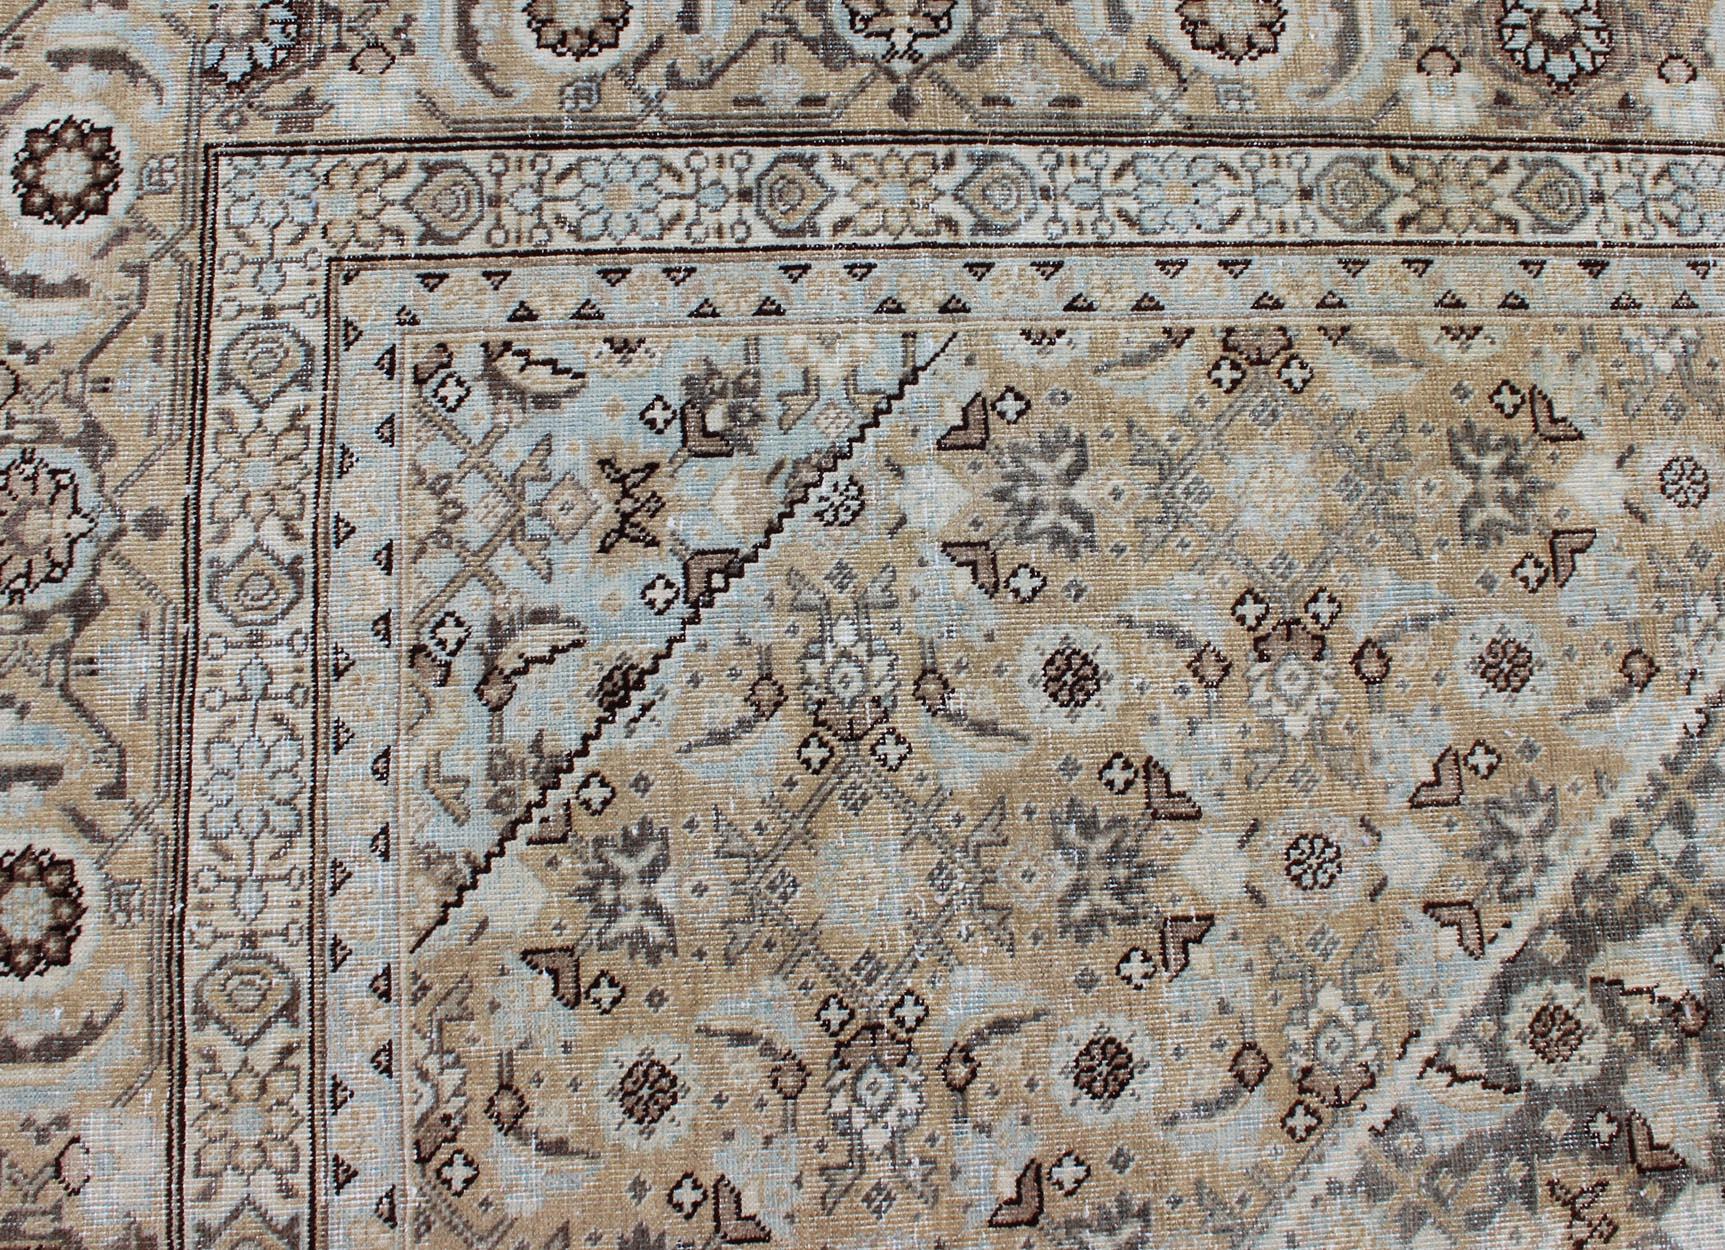 Antique Persian Tabriz Carpet with Geometric Diamond Design in Earth Tones For Sale 3